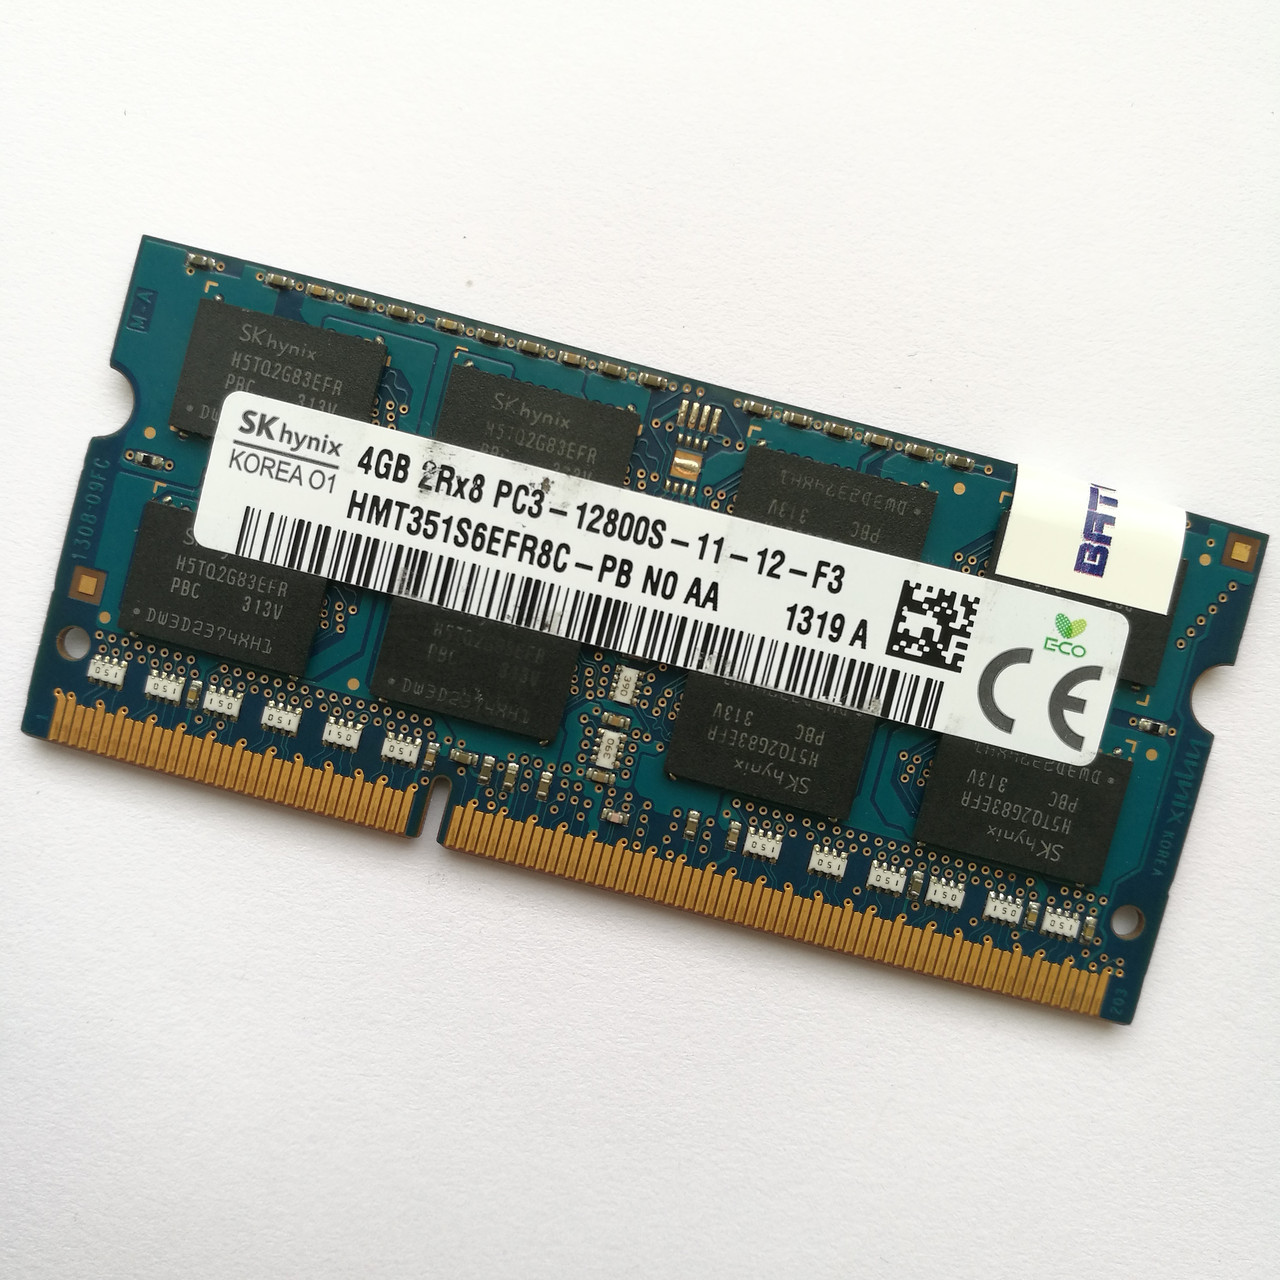 Оперативна пам'ять для ноутбука Hynix SODIMM DDR3 4Gb 1600MHz 12800s 2R8 CL11 (HMT351S6EFR8C-PB N0 AA) Б/В, фото 1